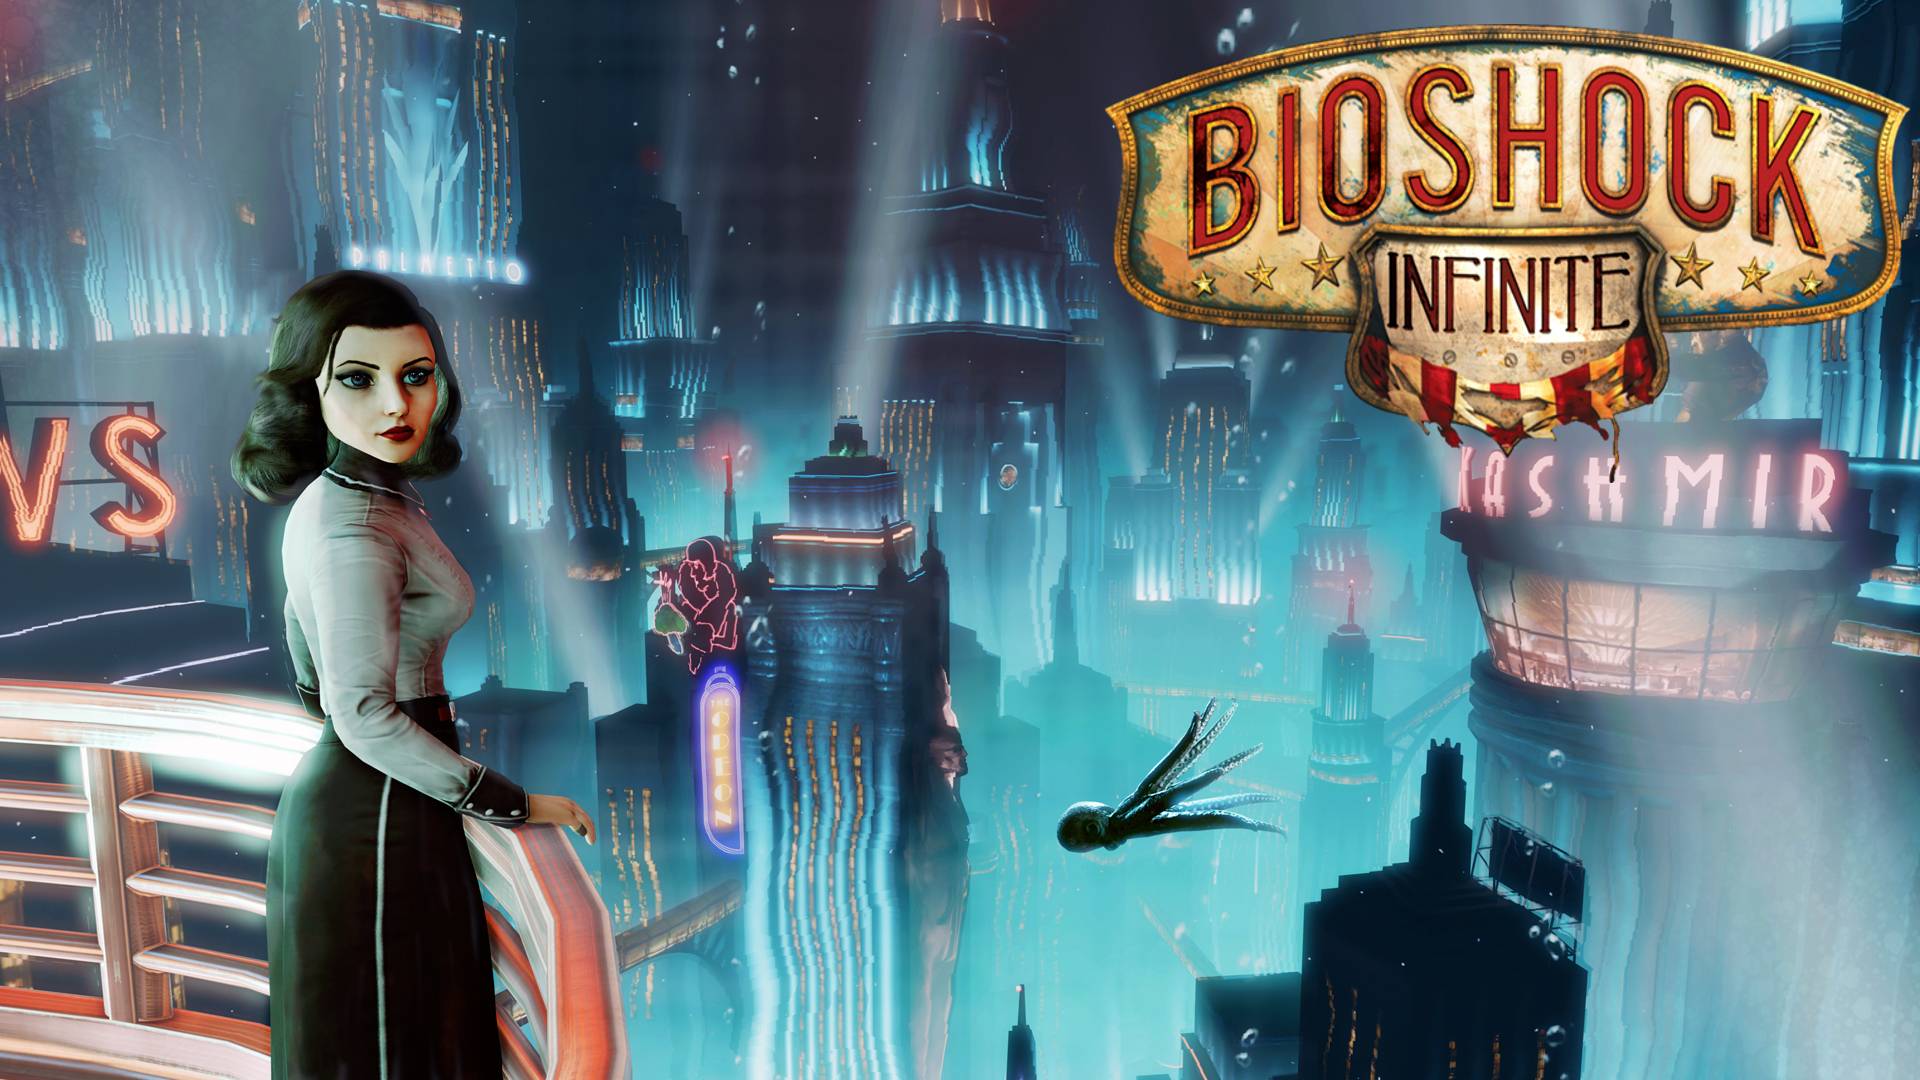 Bioshock Infinite Wallpaper Hd Wallpapers Download 73 Bioshock 